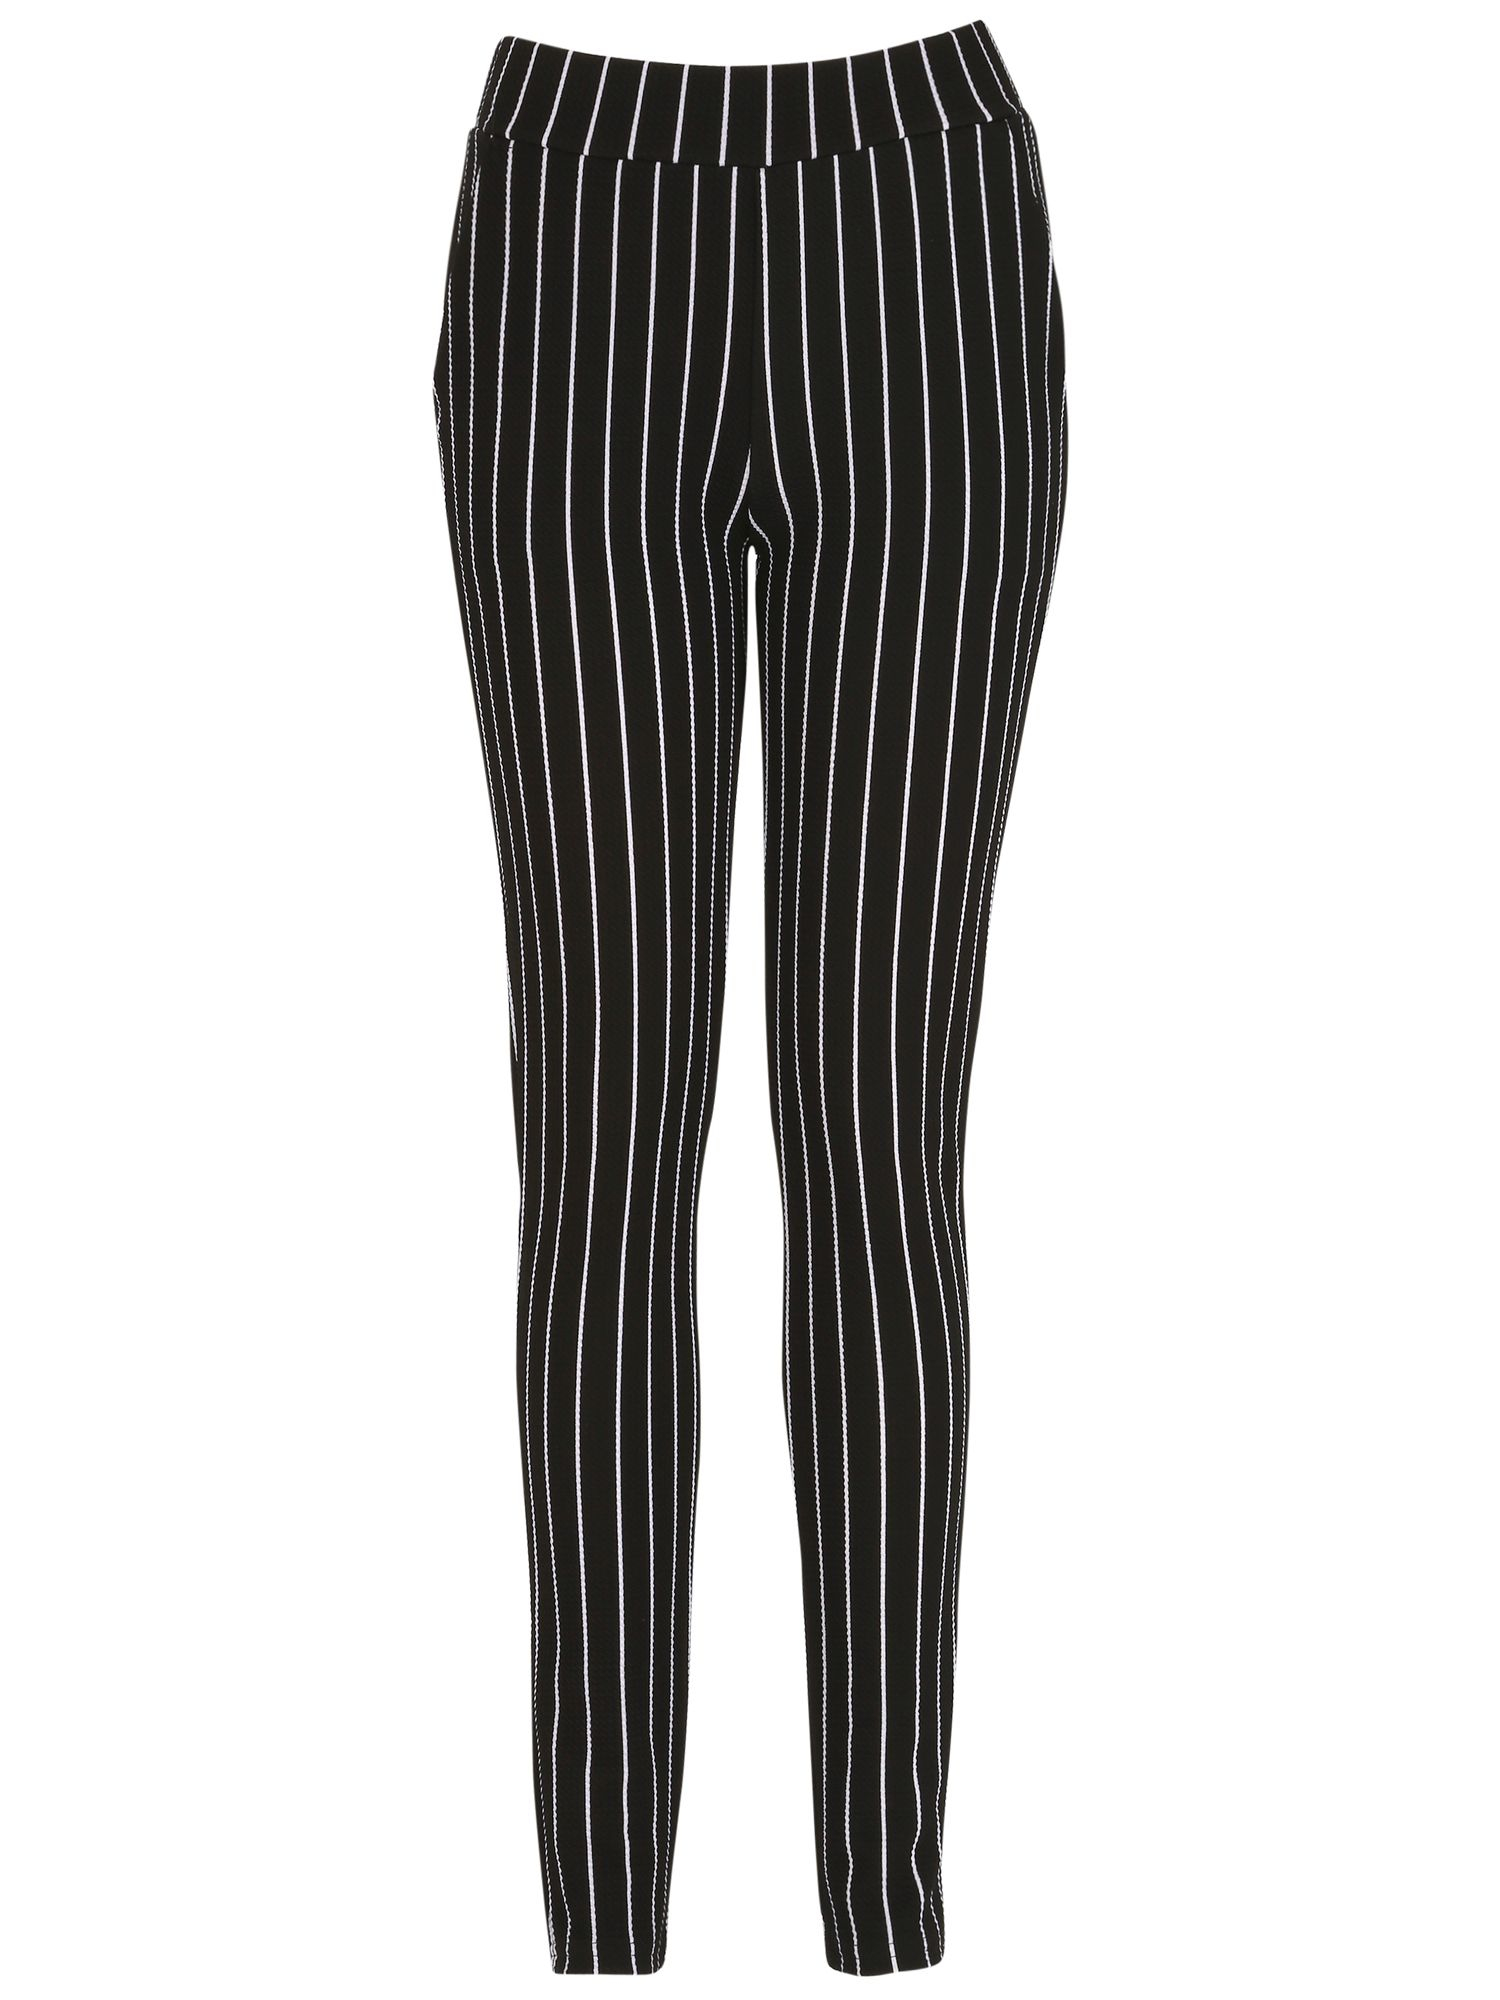 Izabel london Pinstripe Cigarette Pants in Black (Black/White) | Lyst